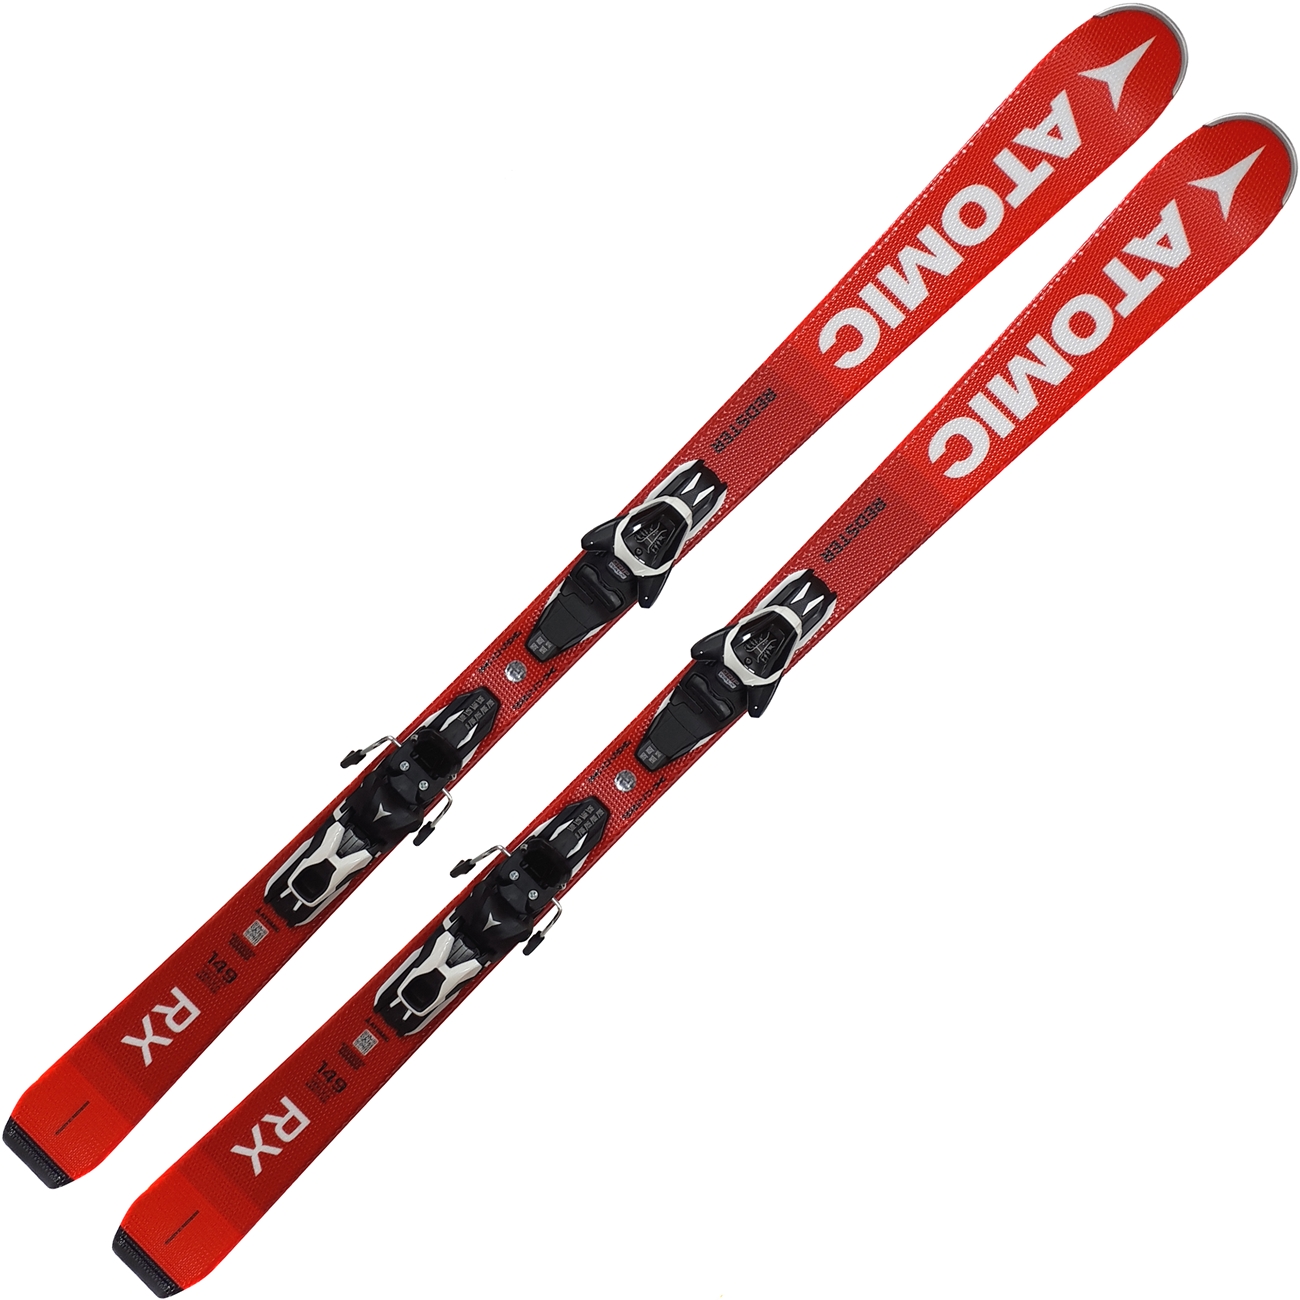 ATOMIC Redster RX Ski 2019/20